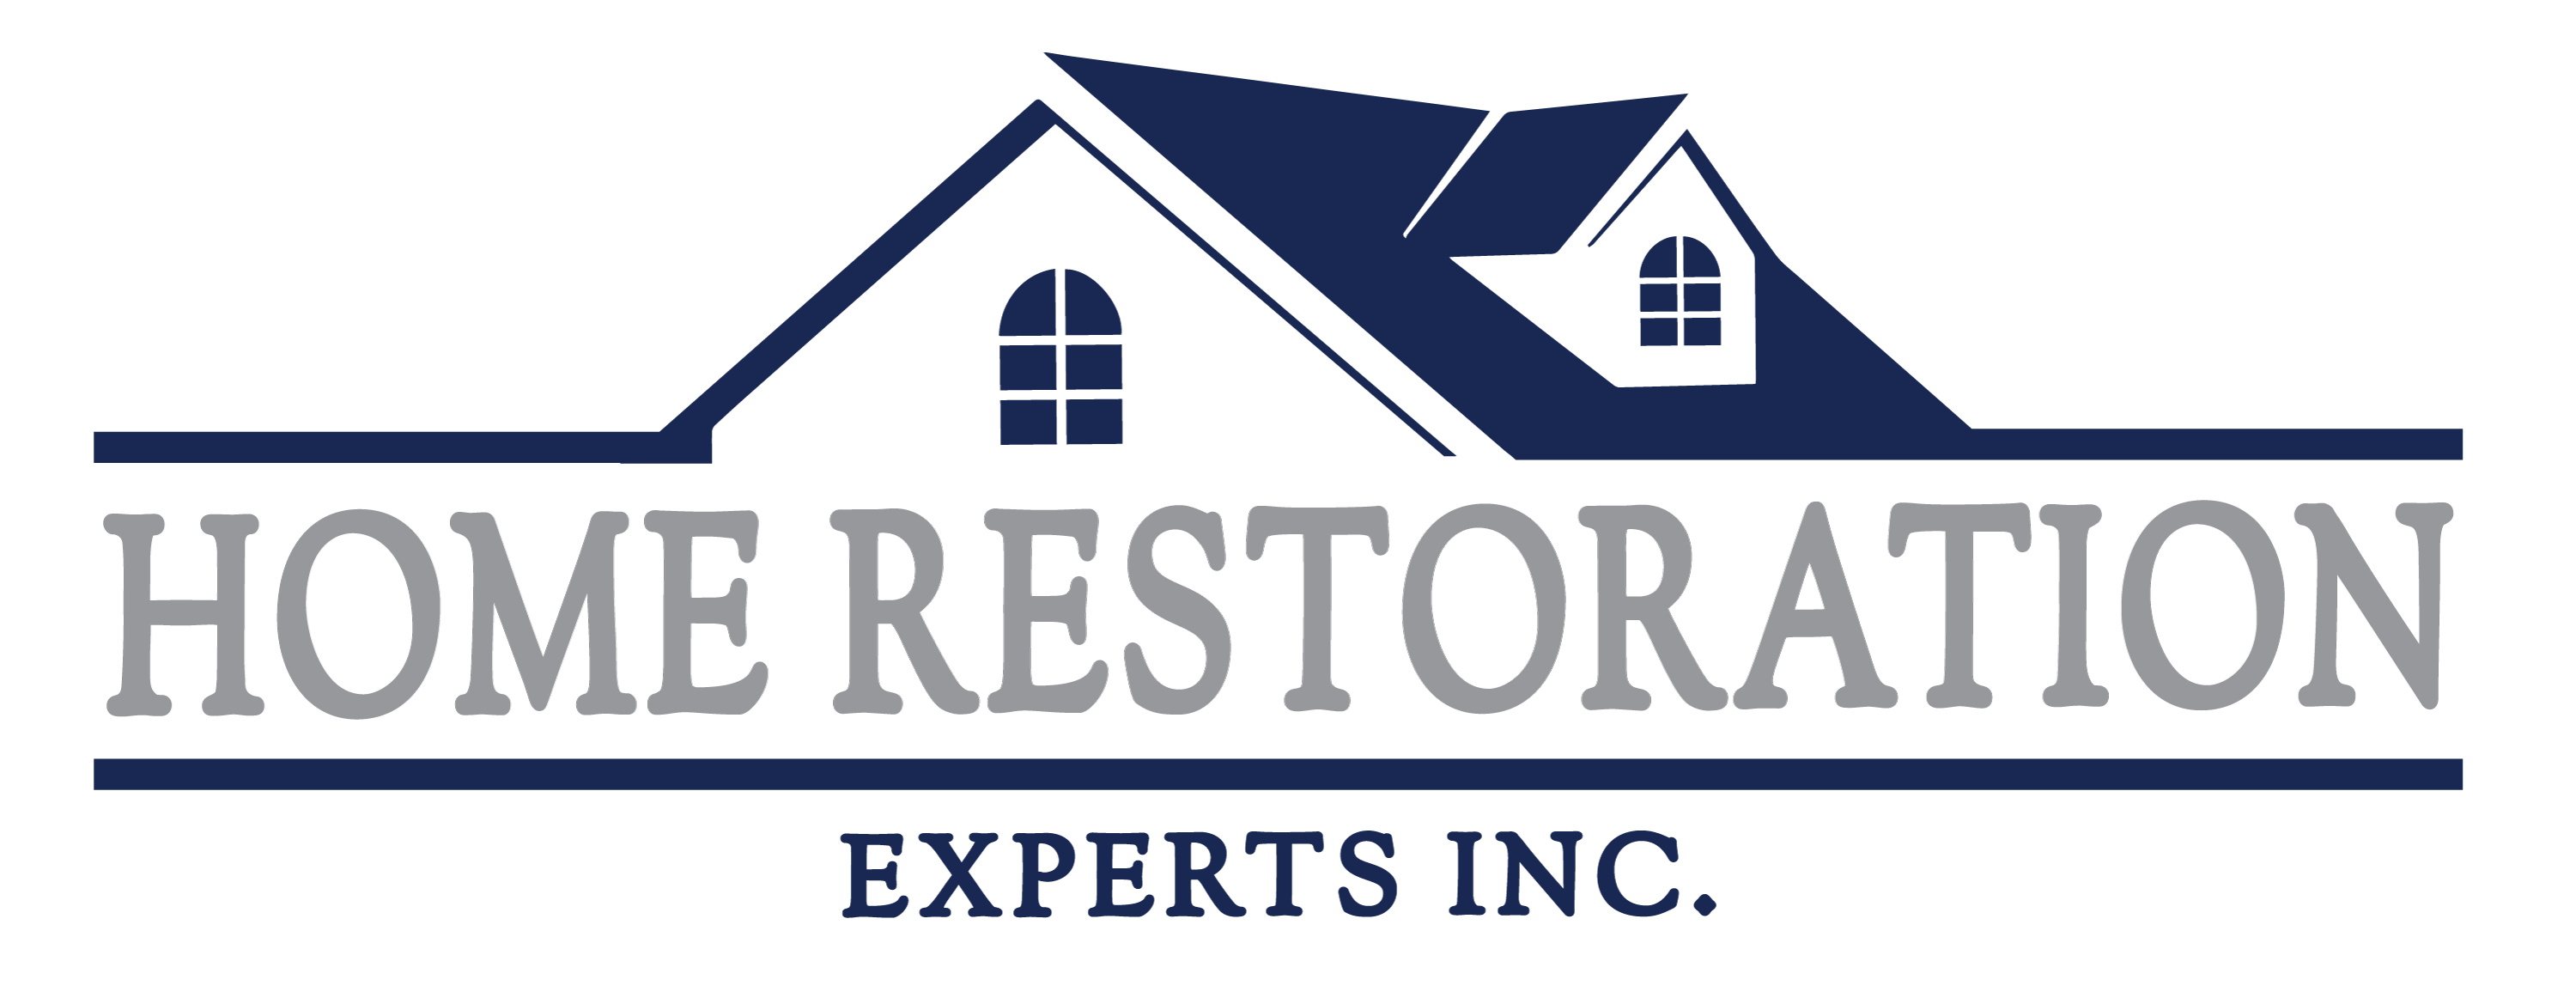 Home Restoration Experts, Inc. Logo